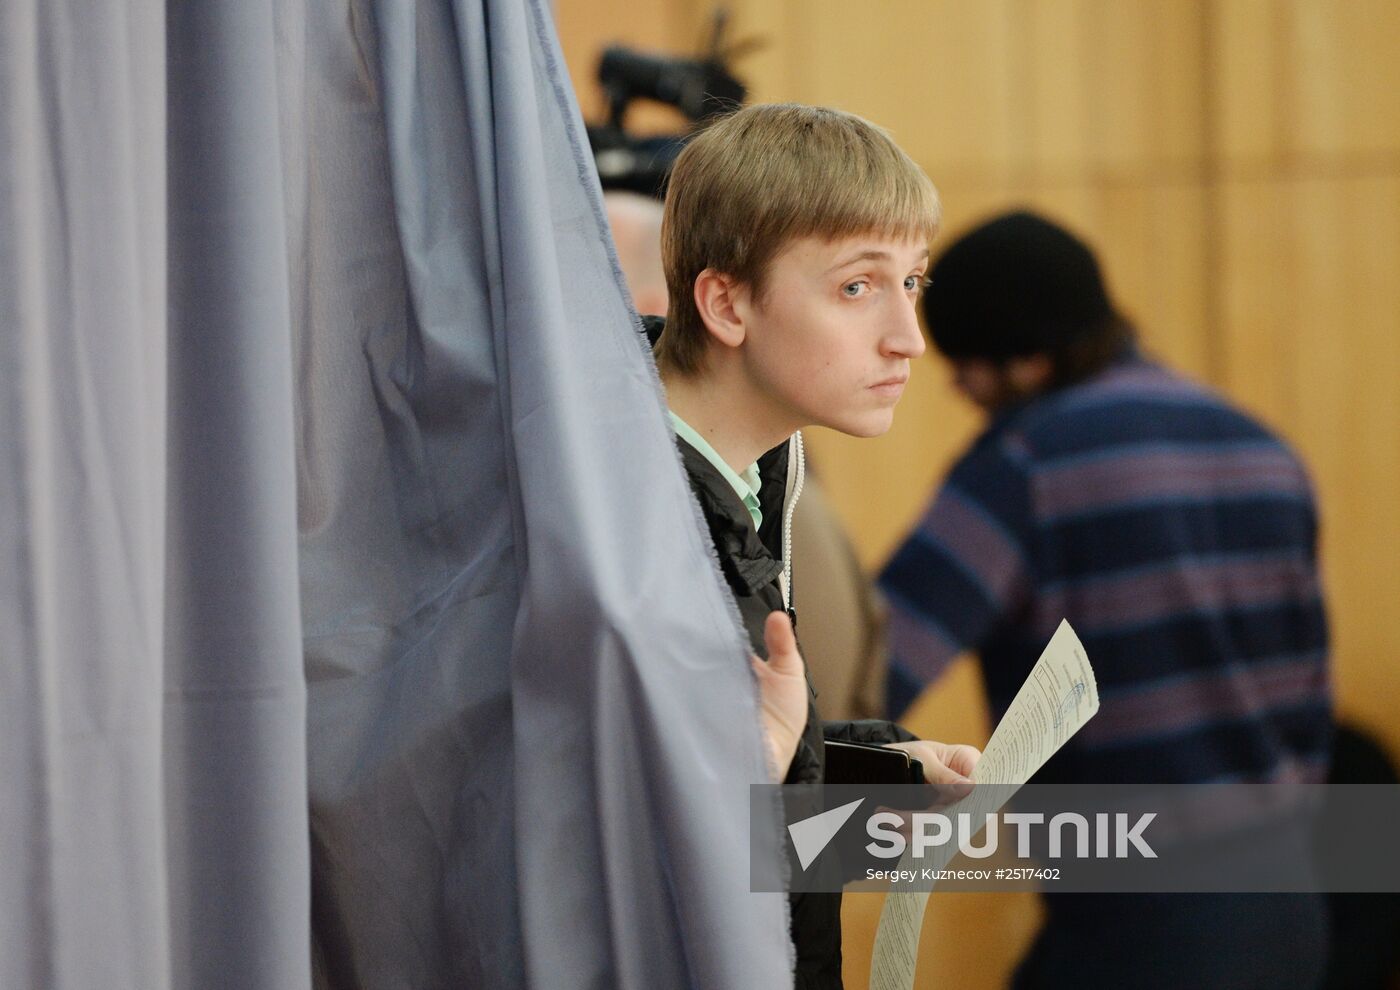 Ukraine's extraordinary parliamentary election in Ukraine's embassy in Moscow